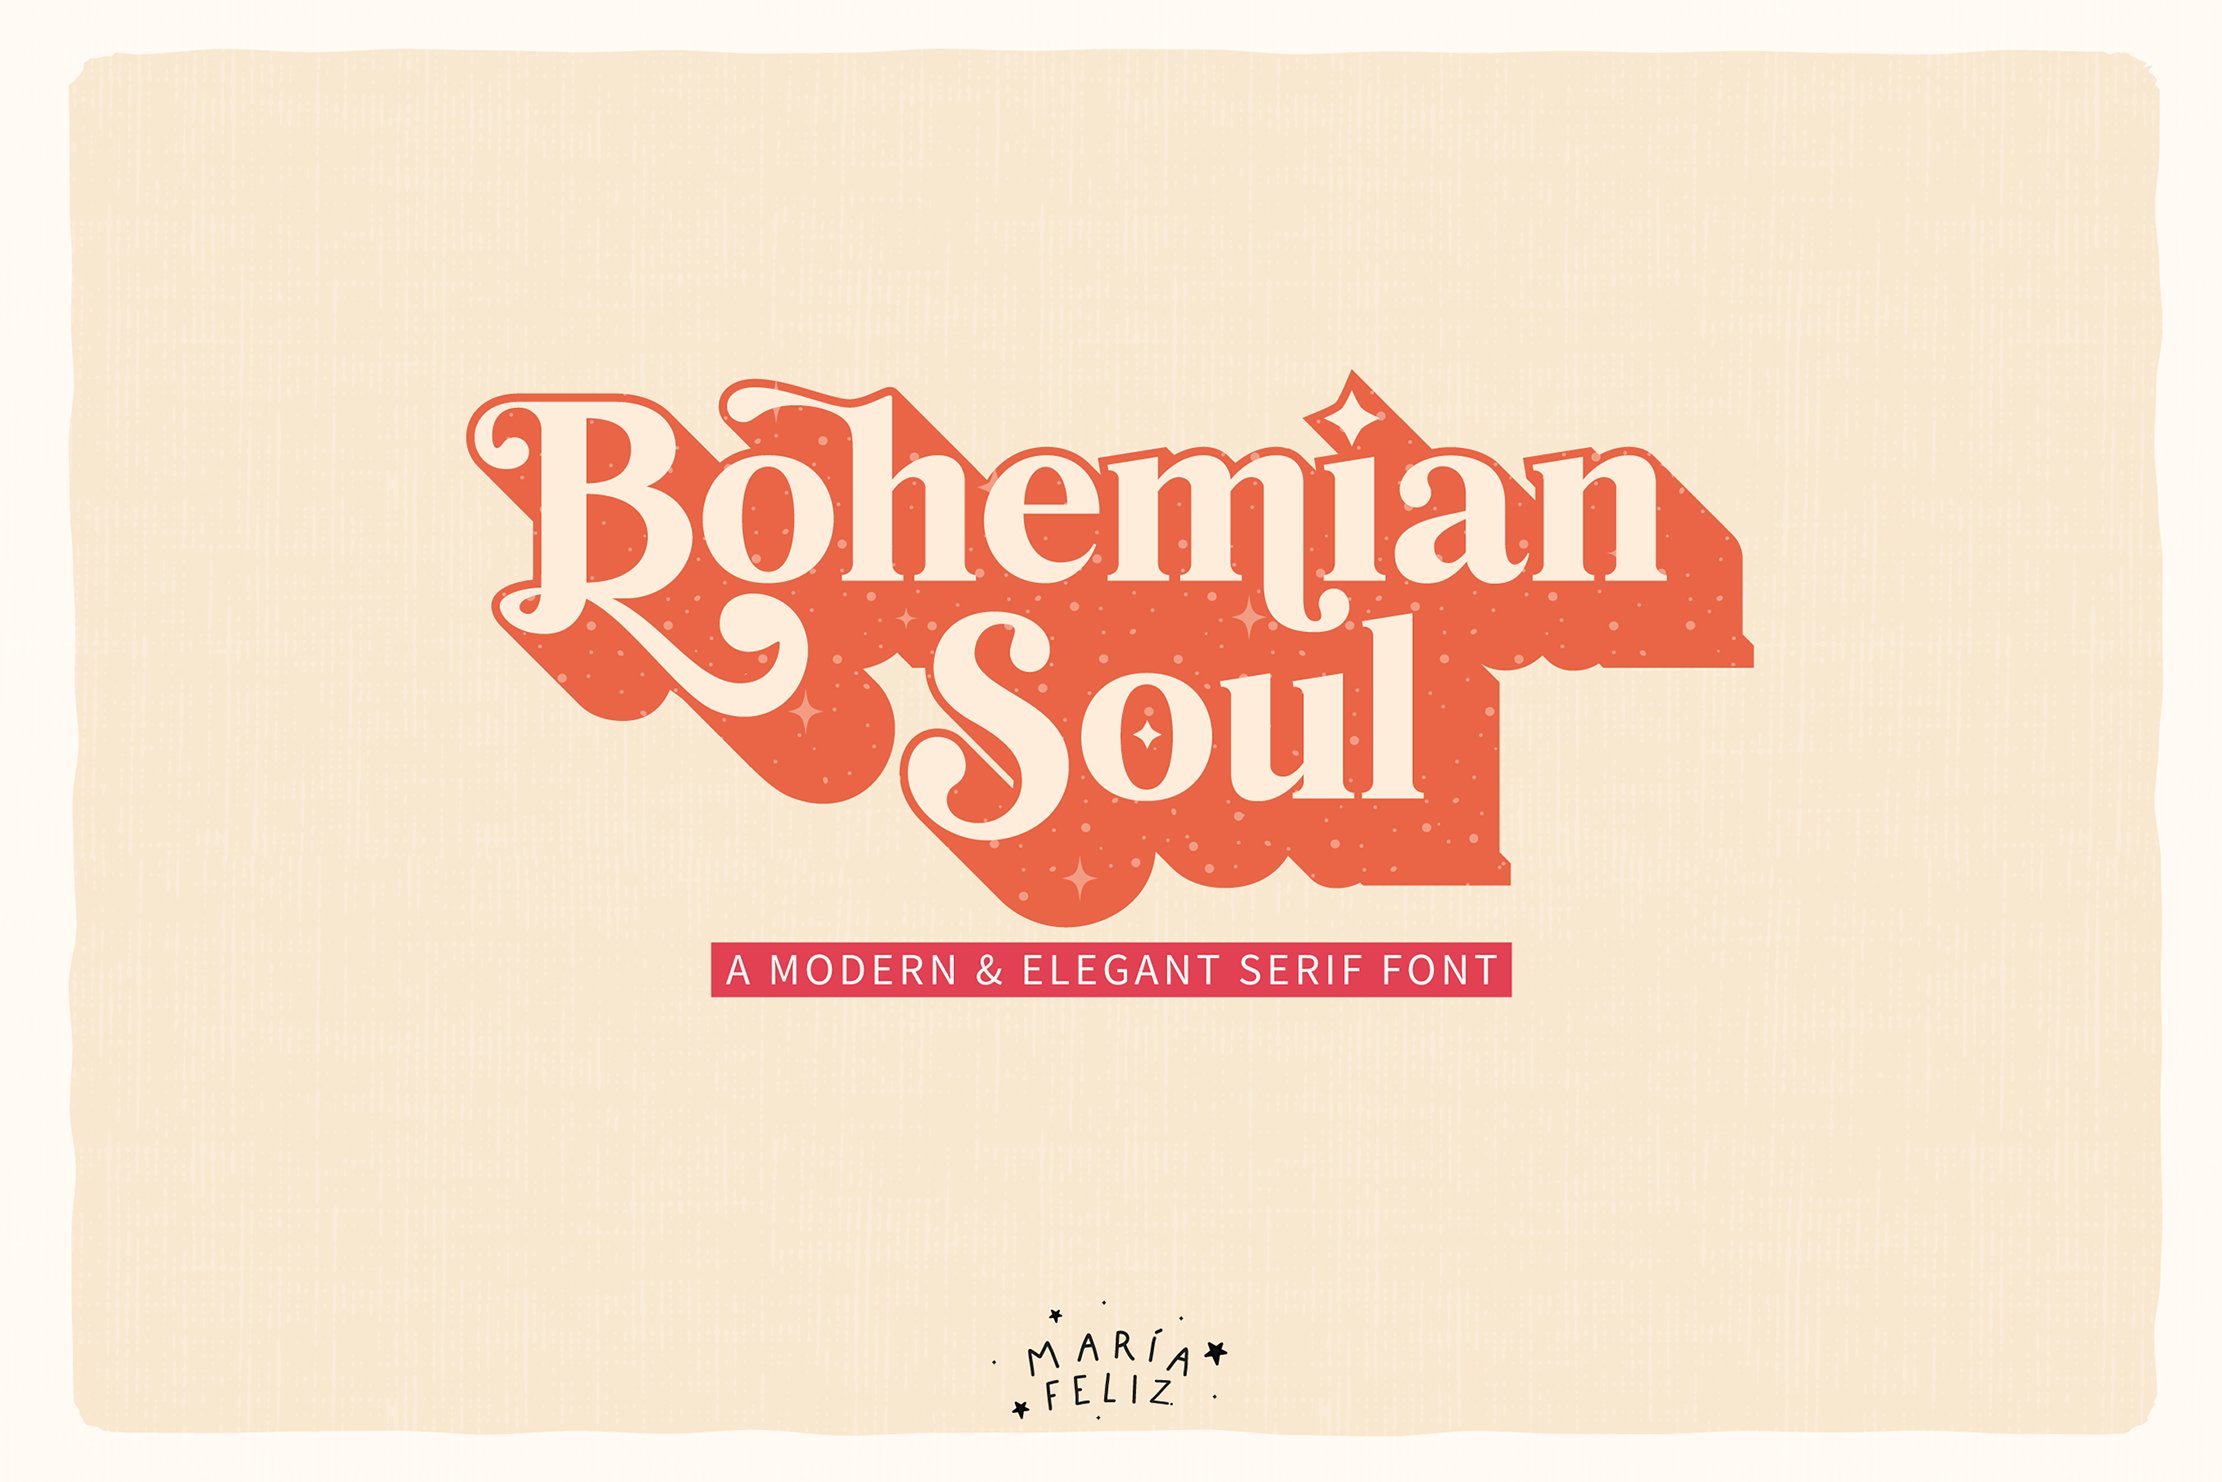 Bohemian Soul cover image.